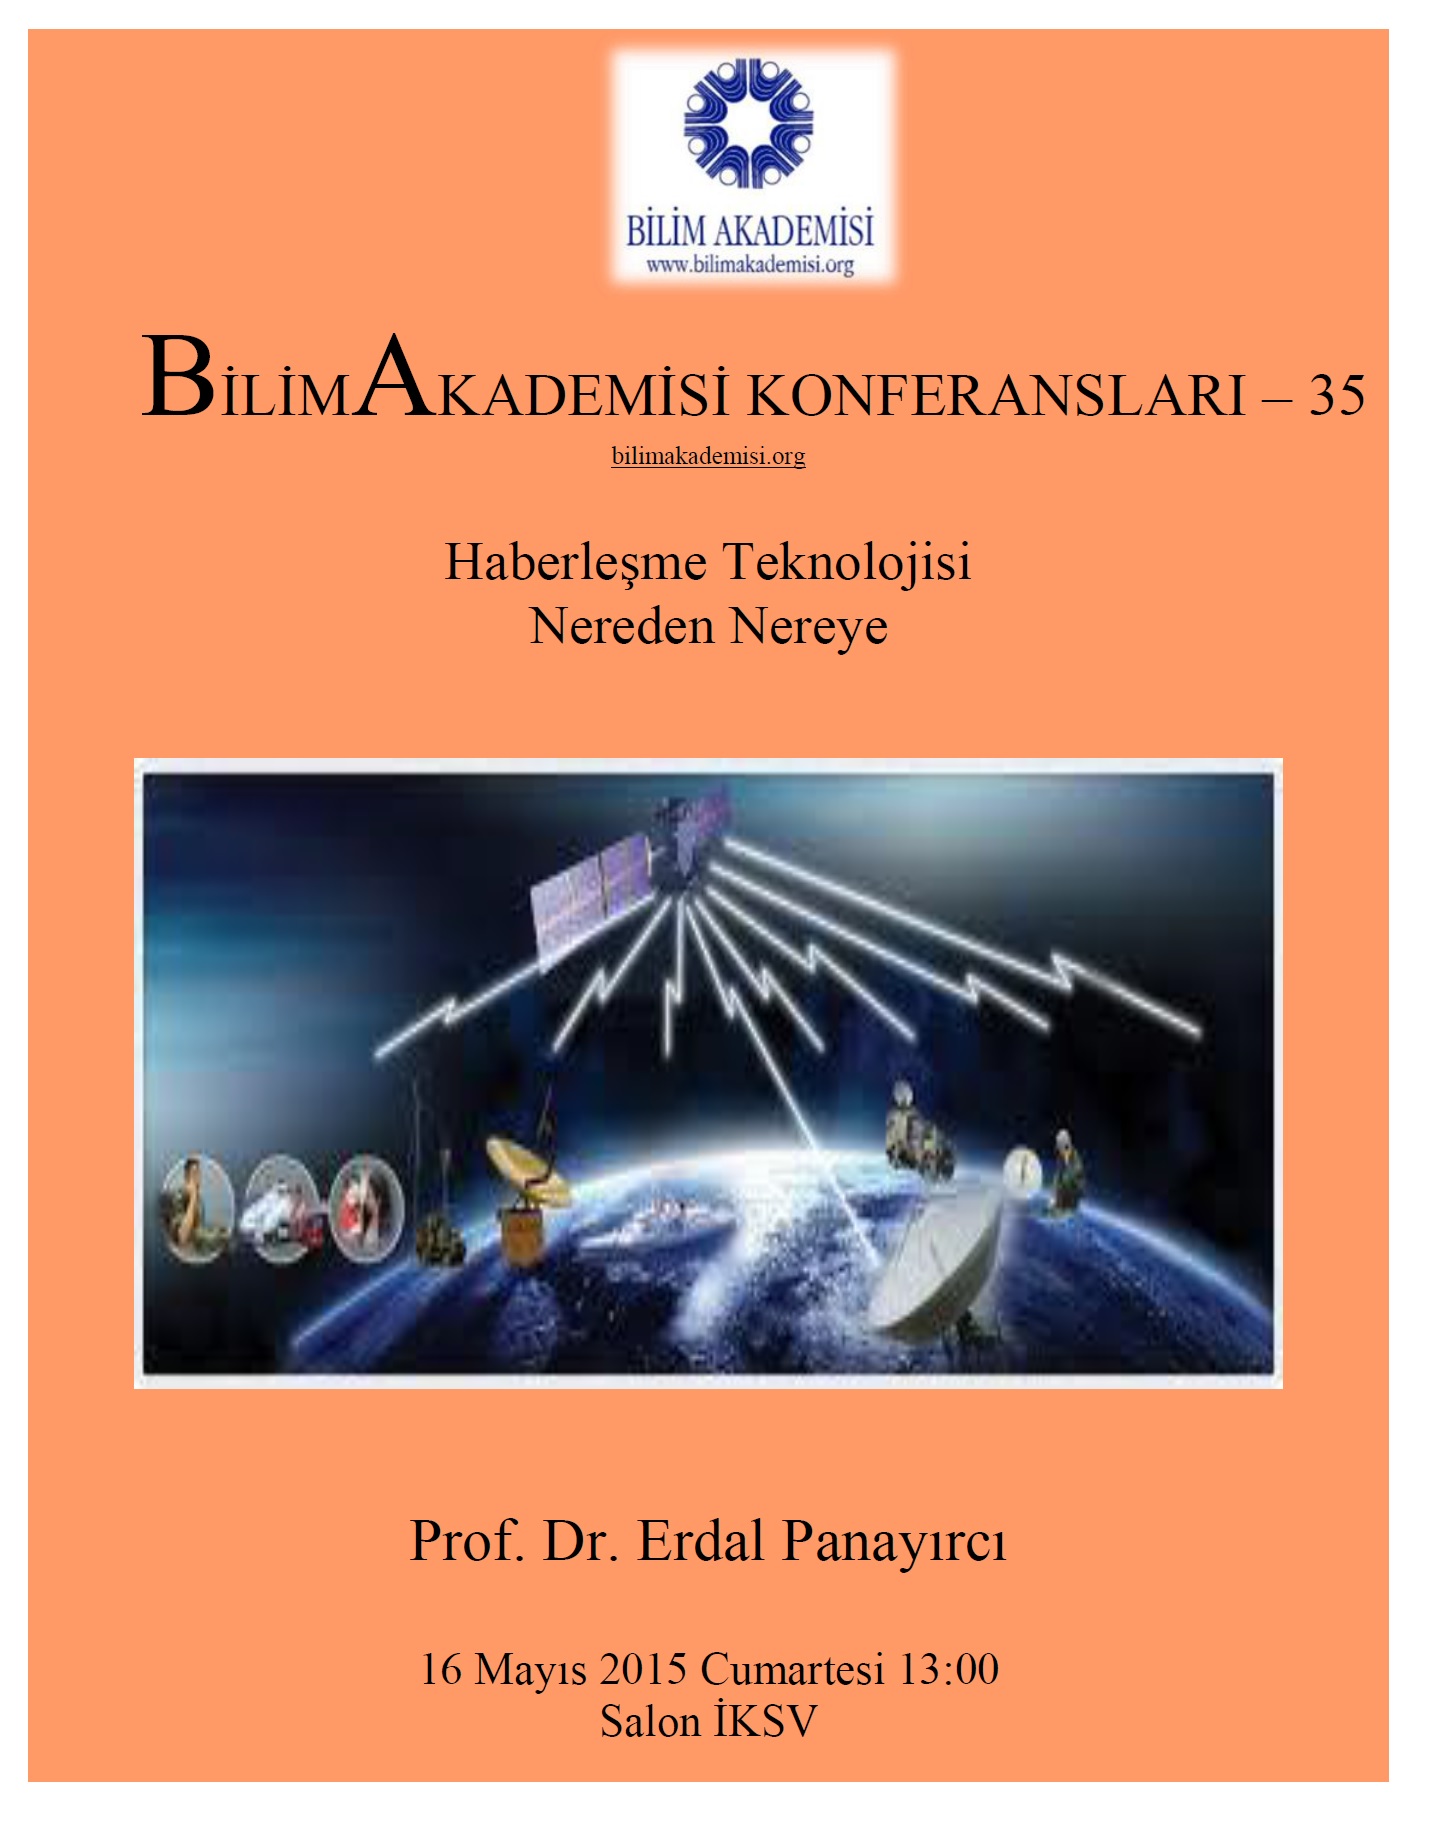 Past and Future of Communication Technology  – Speaker: Erdal Panayırcı